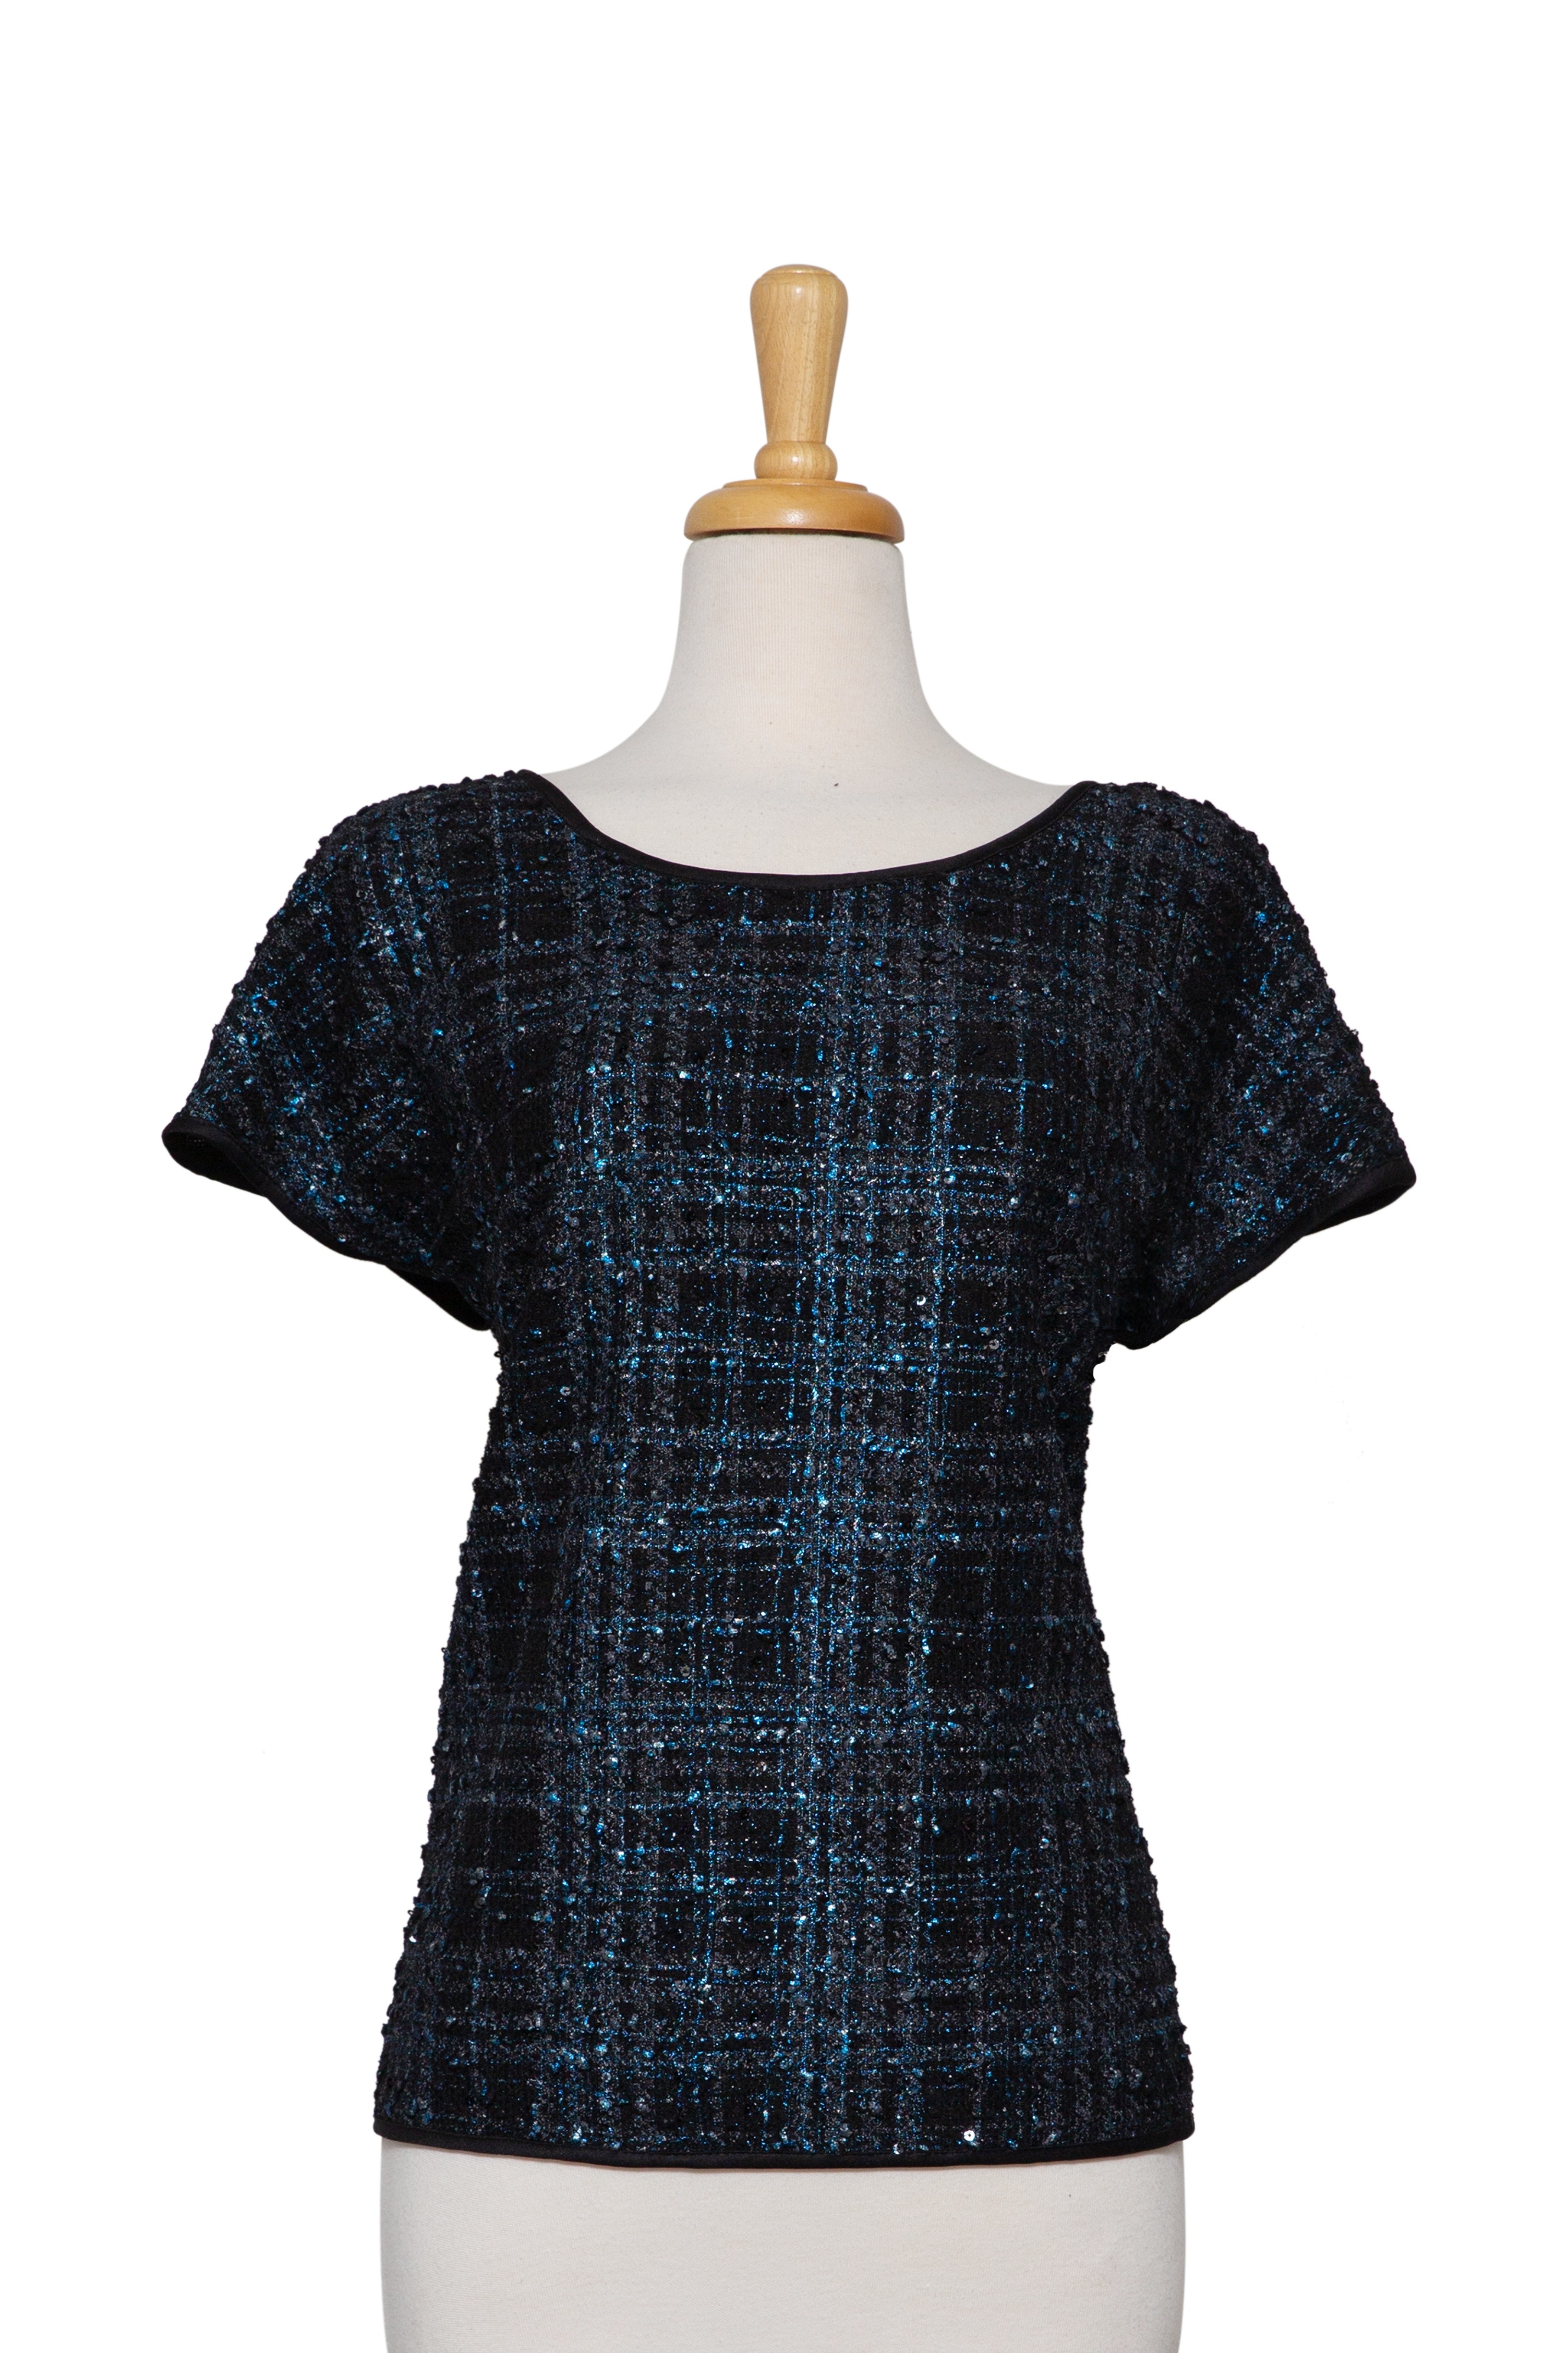 Blue and Black Metallic Knit, Solid Black Ponte Knit Back, Short Sleeve Top